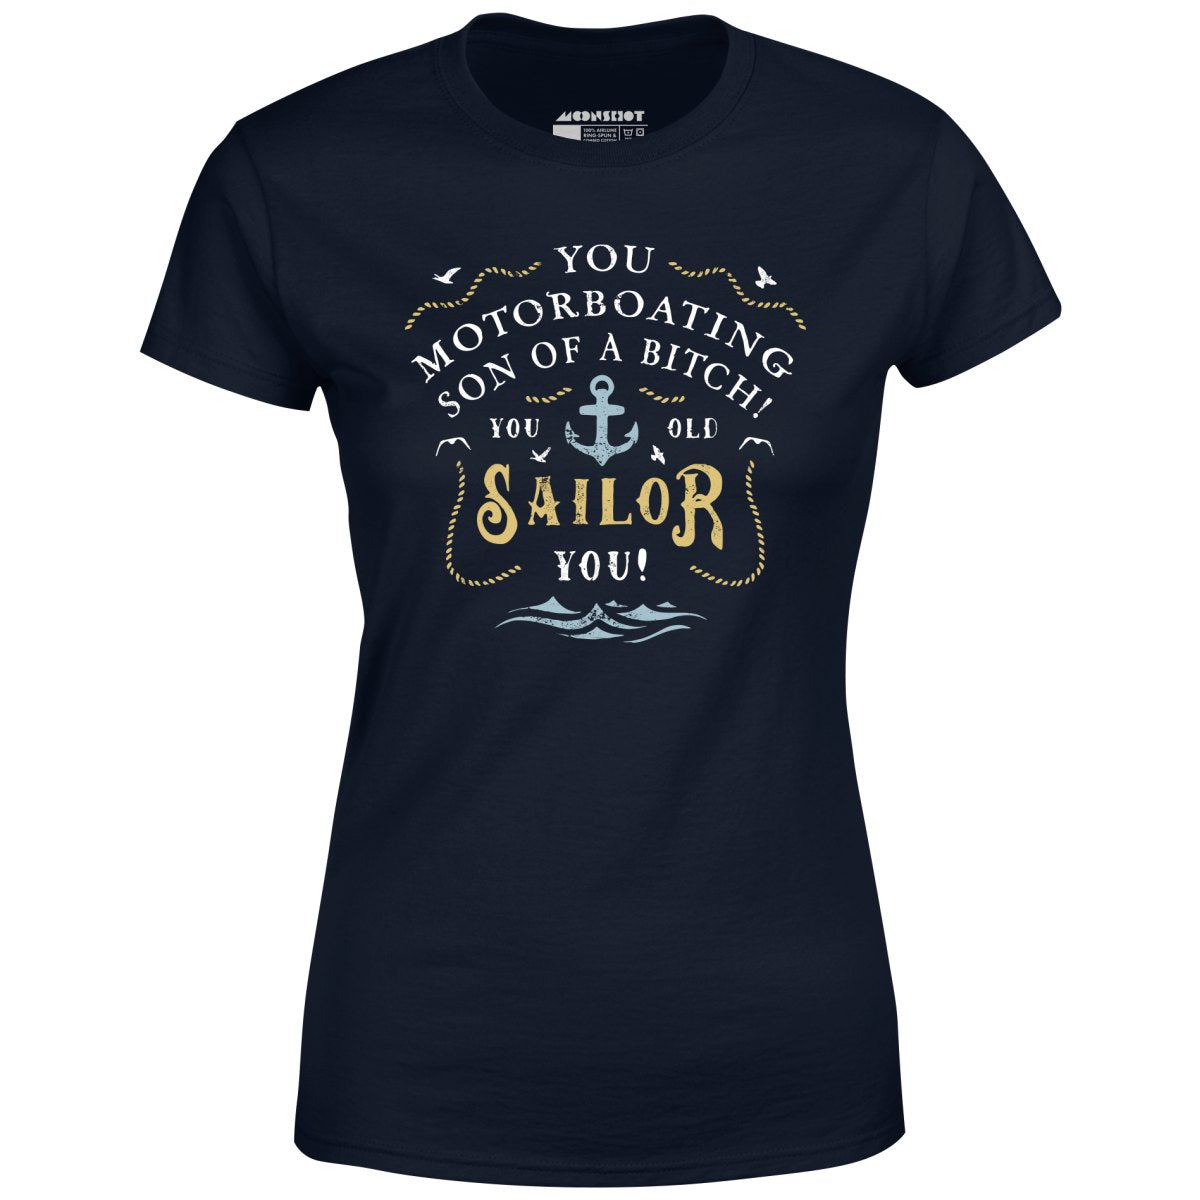 You Old Sailor You - Women's T-Shirt